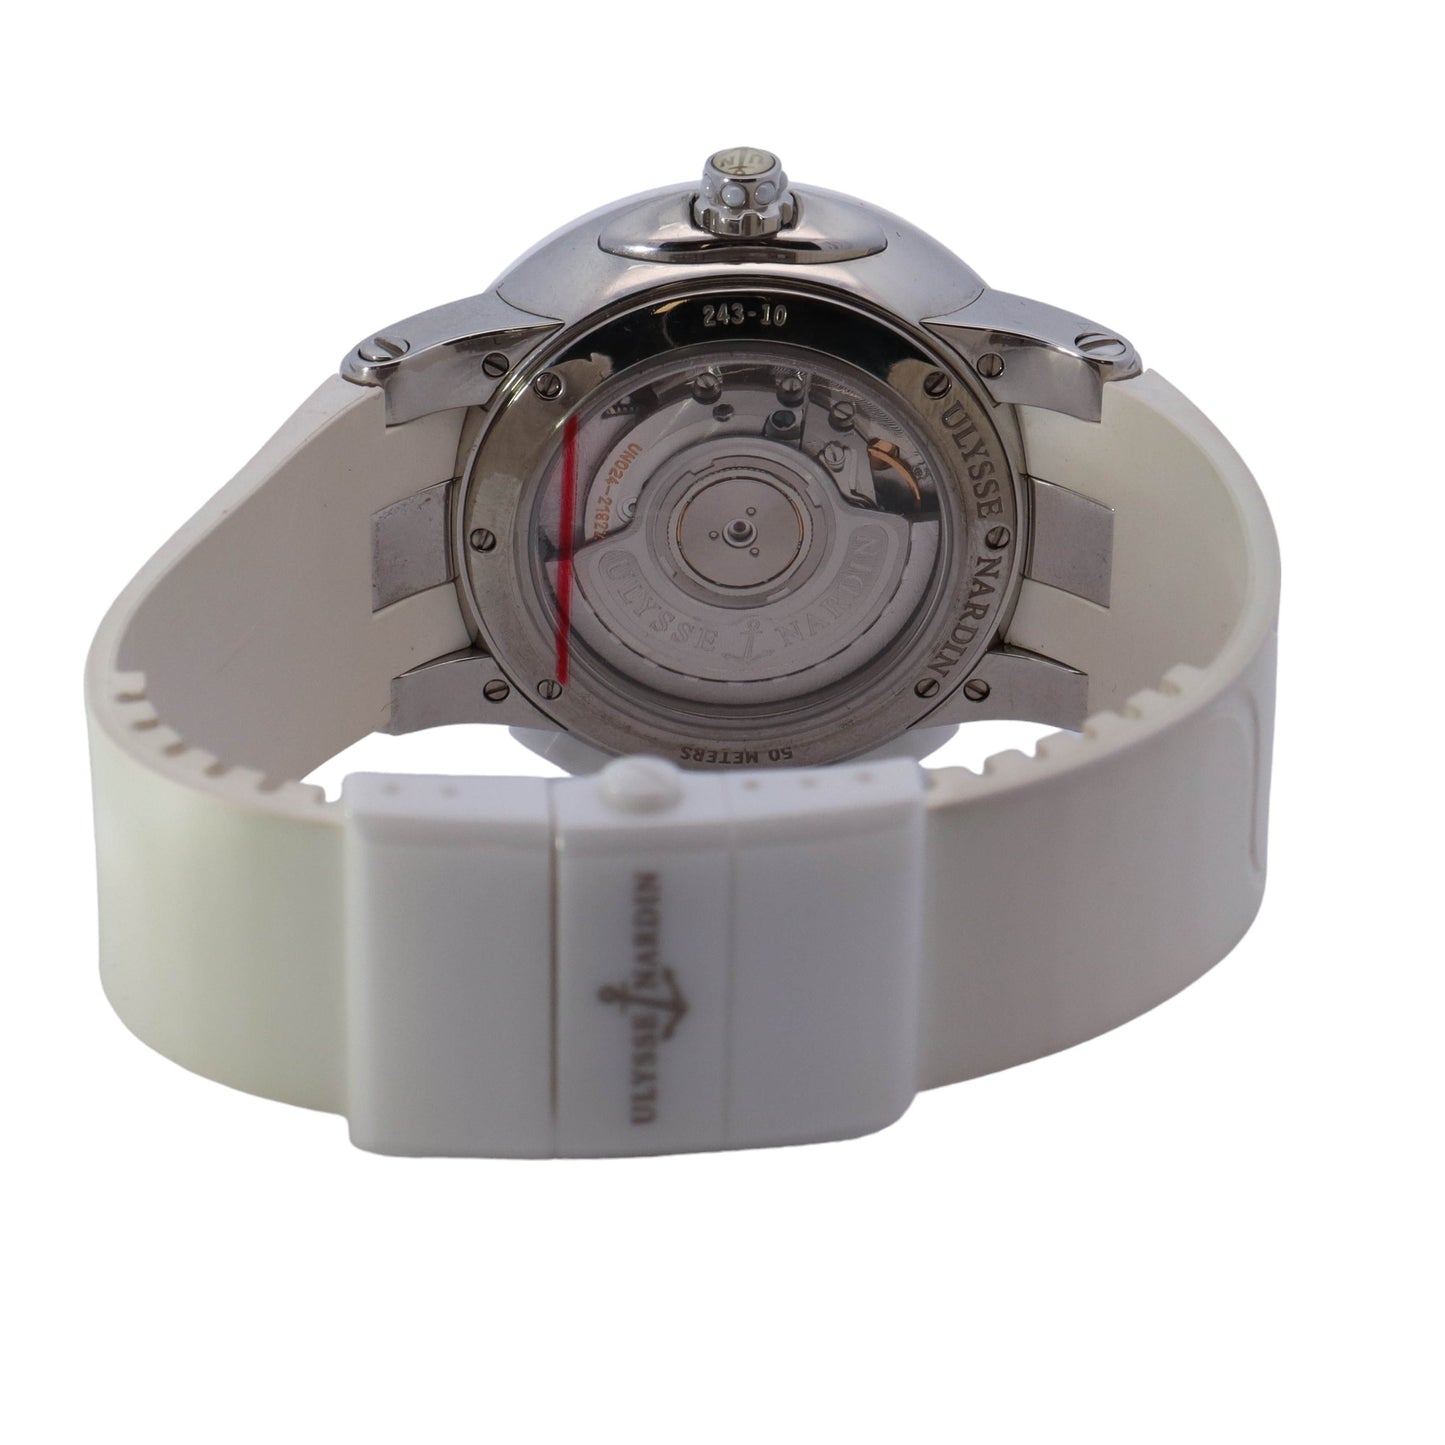 Ulysse Nardin Dual Time GMT 243-10 Stainless Steel 41mm White MOP Diamond Roman Dial Watch Reference #: 243-10 - Happy Jewelers Fine Jewelry Lifetime Warranty